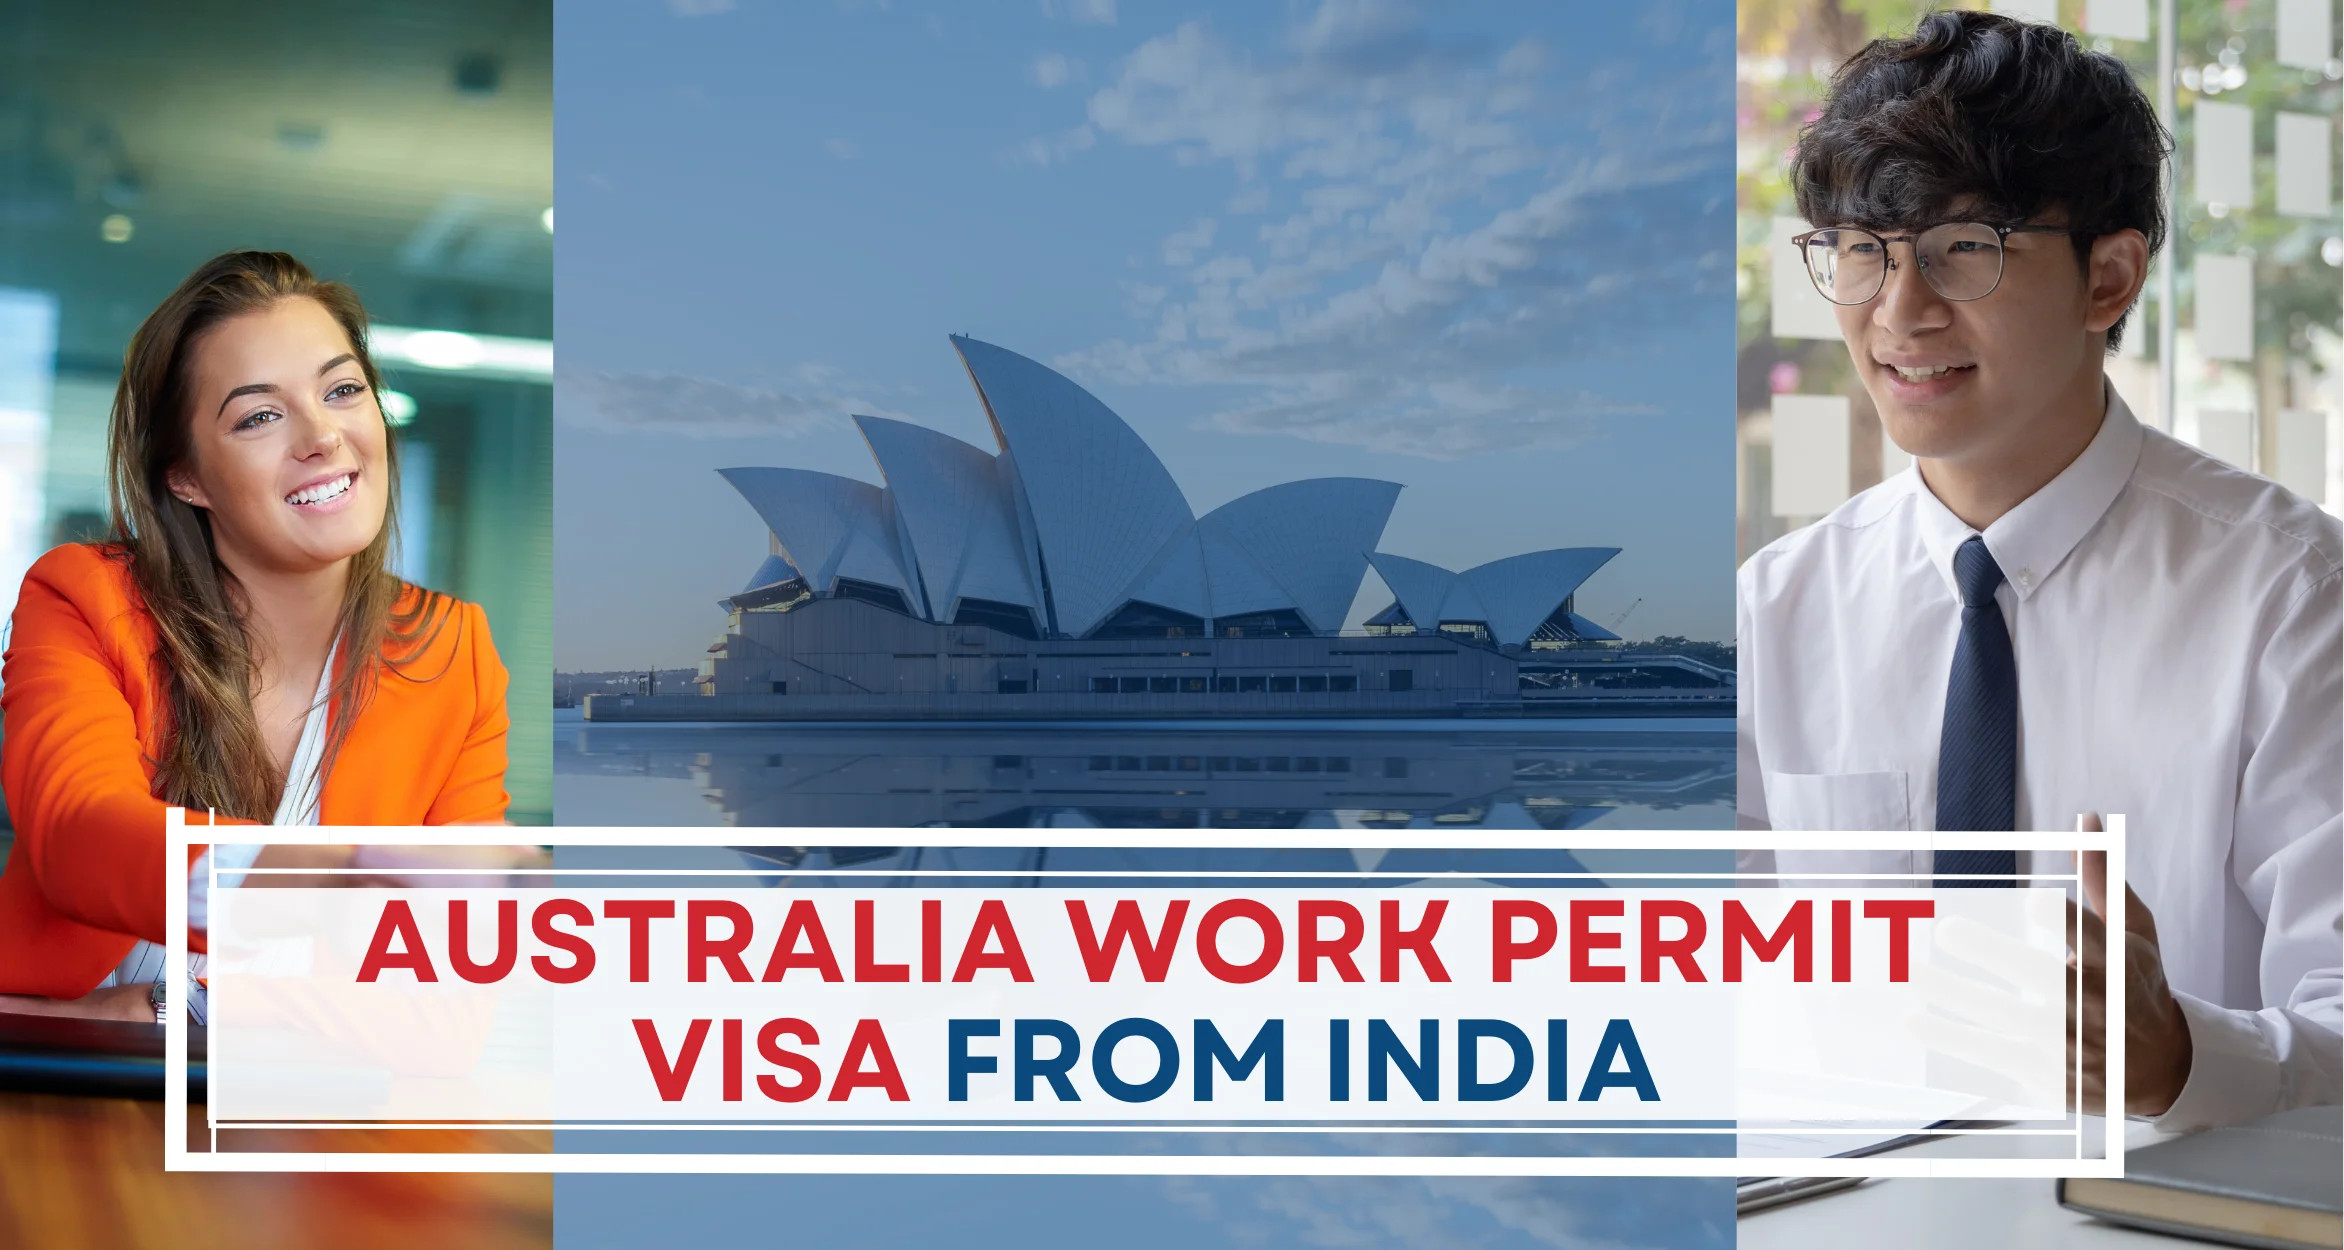 Australia Work Permit Visa from India